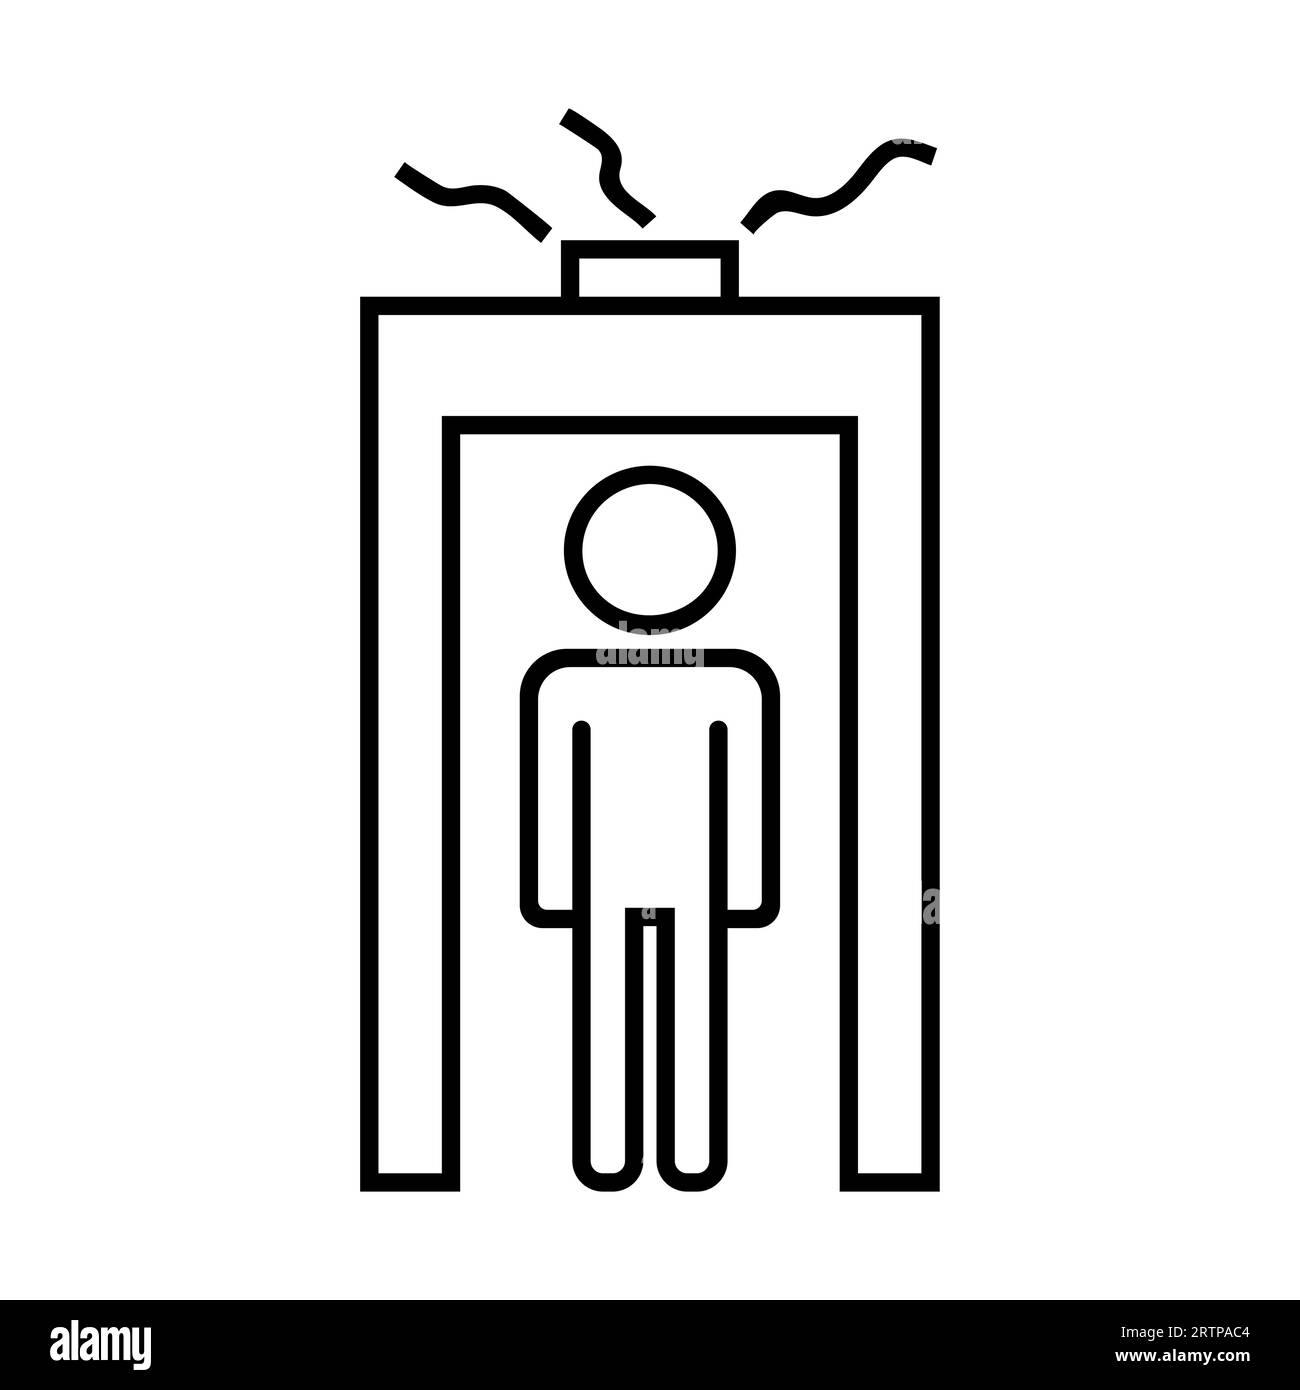 Simple outline of man walking through metal detector vector icon Stock Vector